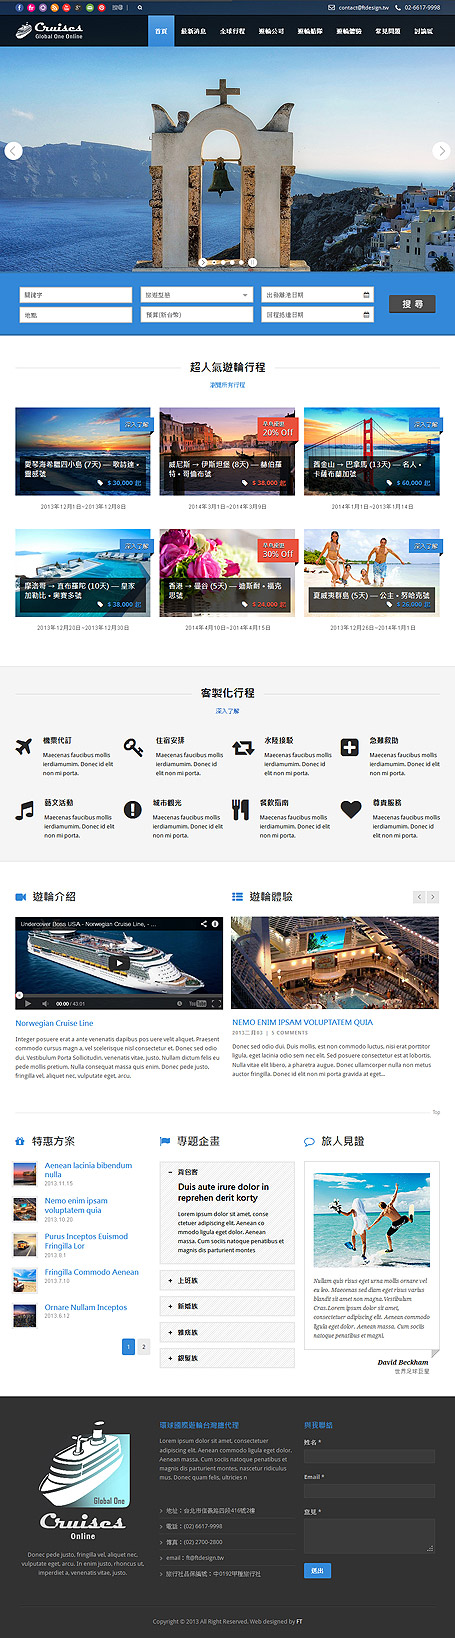 Portal 網頁設計 台北網頁設計公司 homepage 遊輪產品線上訂購 電子商務網站 cruise 自適應網頁設計 響應式網頁設計 手機版網頁設計